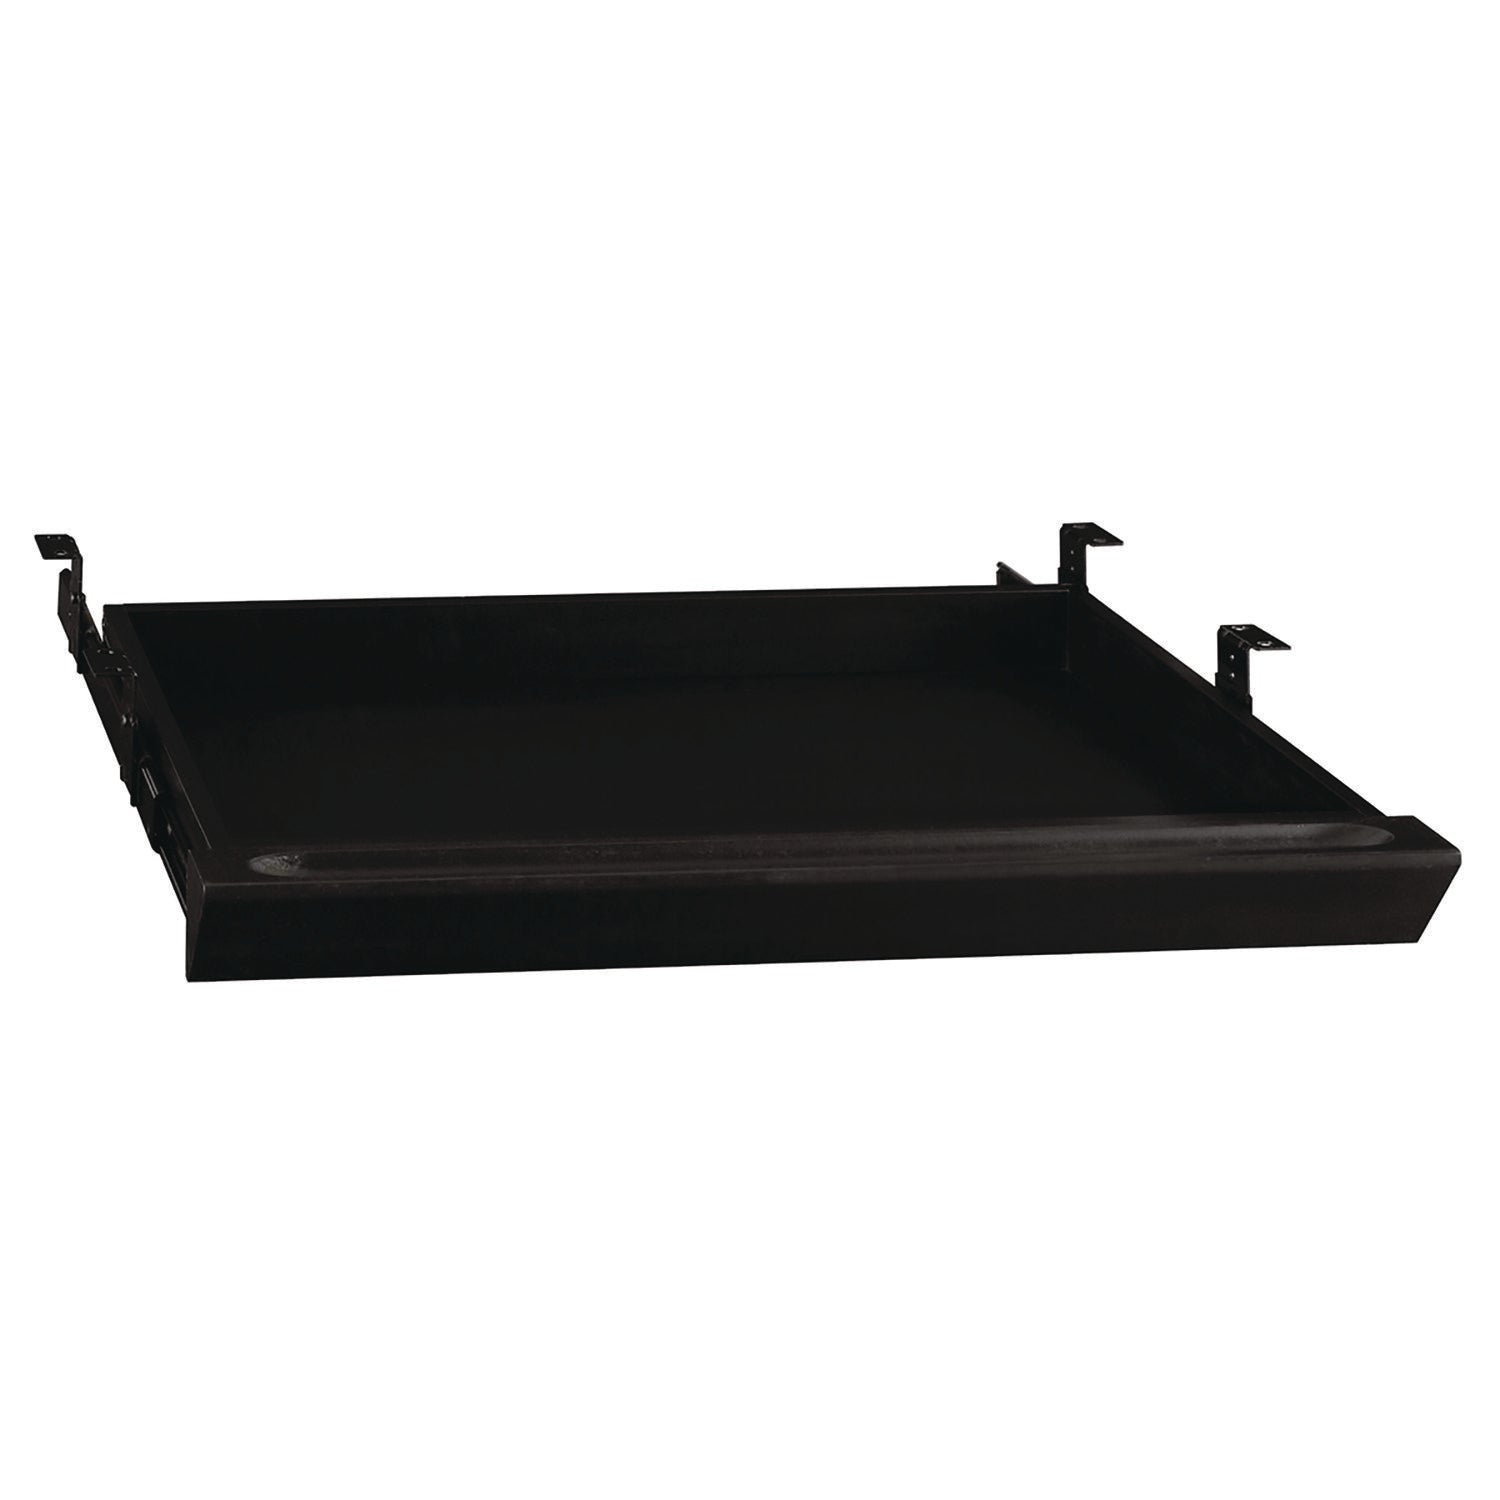 universal-pencil-drawer-accessory-metal-wood-2638w-x-1588d-x-275h-black_bshac99850 - 1